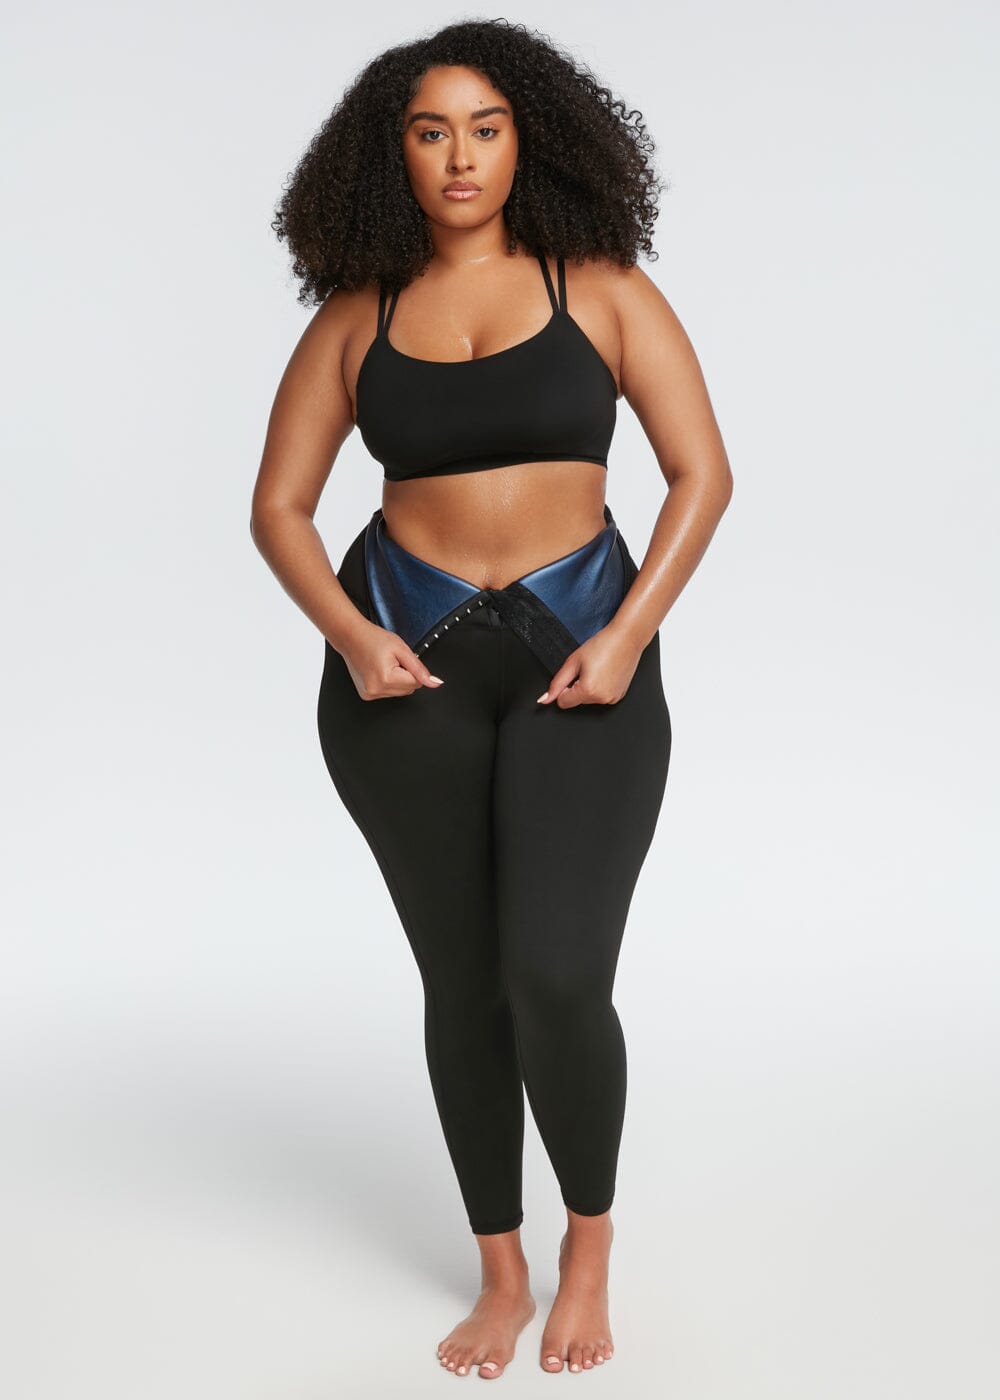 Upgrade Women Body Shaper Pants Sweat Sauna Effect Slimming Pants Fitness  Shorts Shapewear Workout Gym Leggings Plus Size S-5XL Color: style A, Size:  4XL-5XL